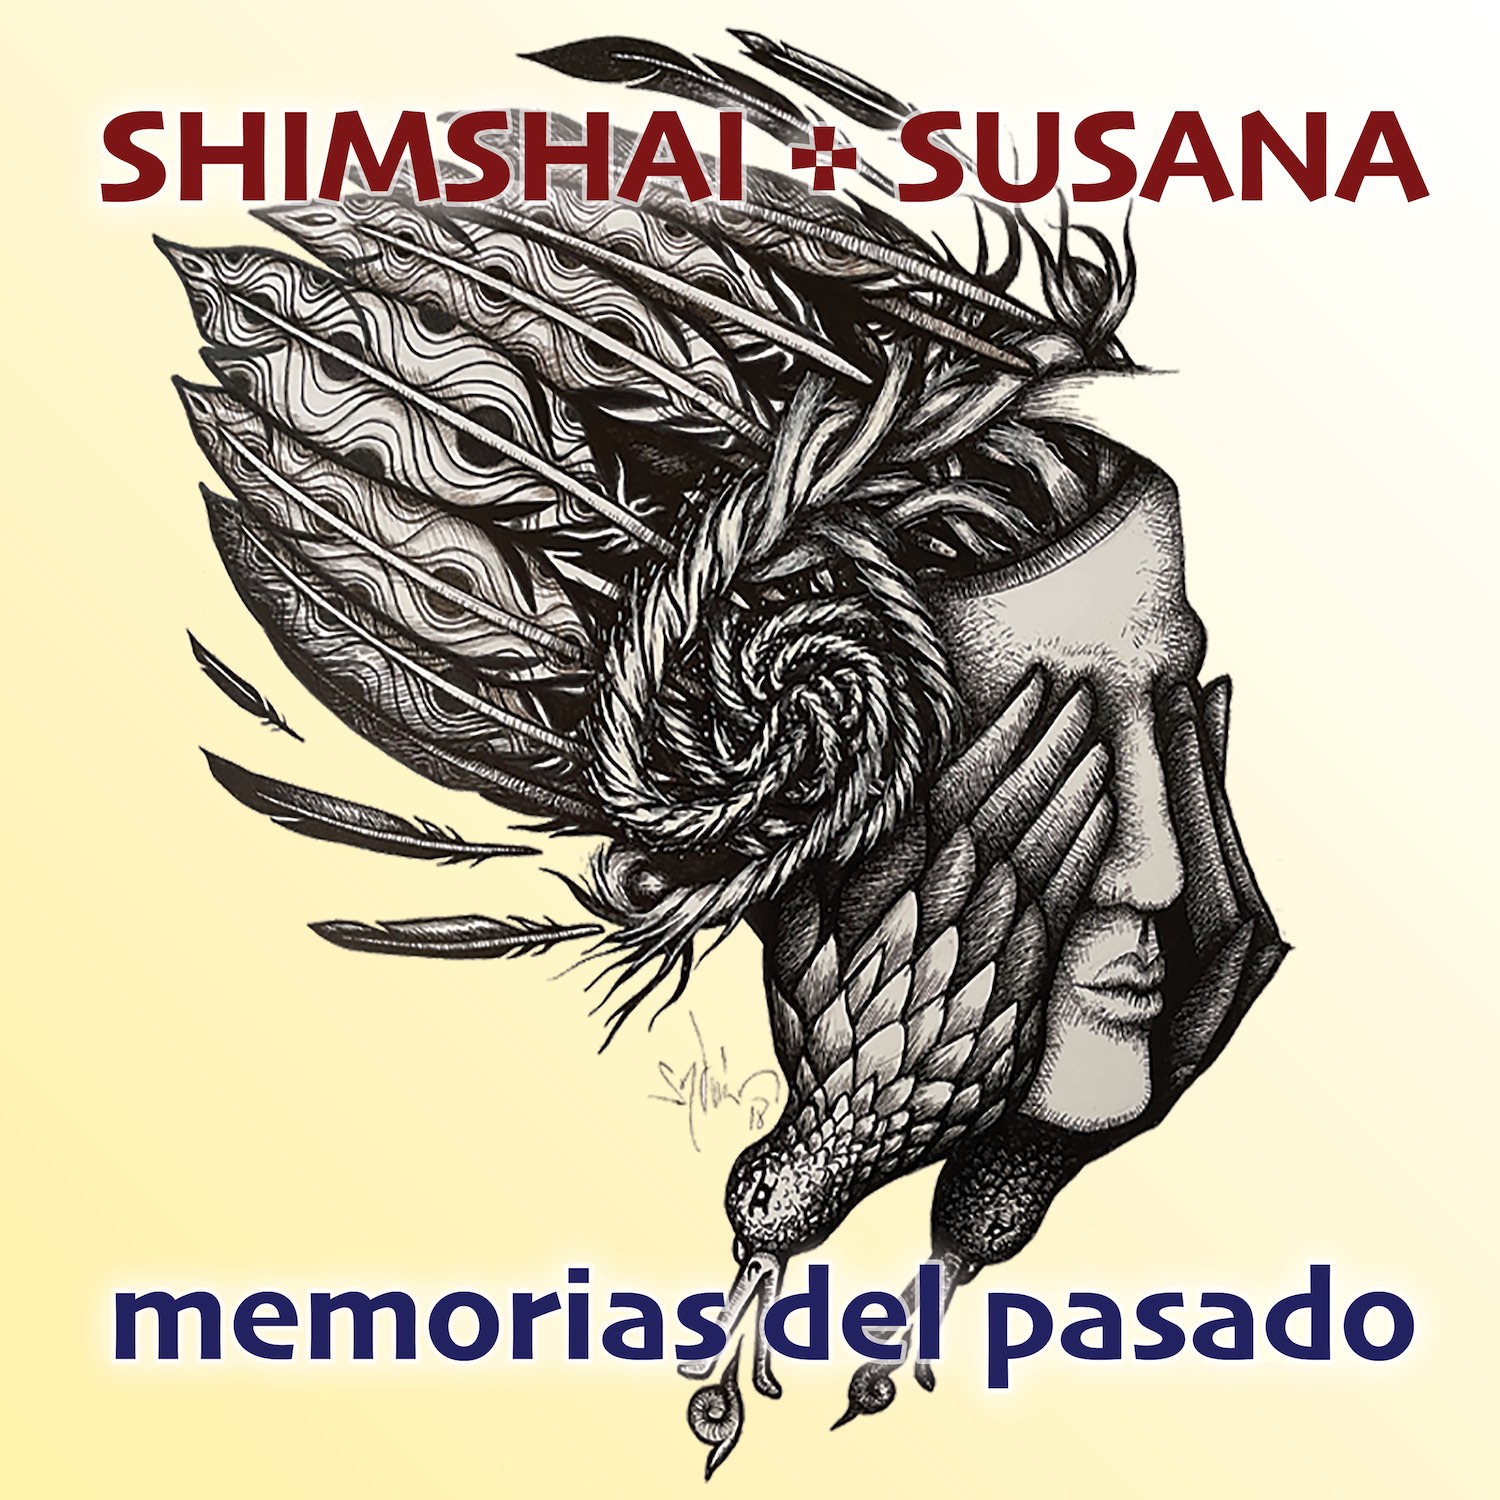 Memorias del Pasado traditional Mexhica prayer folk song medicine music from Mexico by Shimshai & Susana